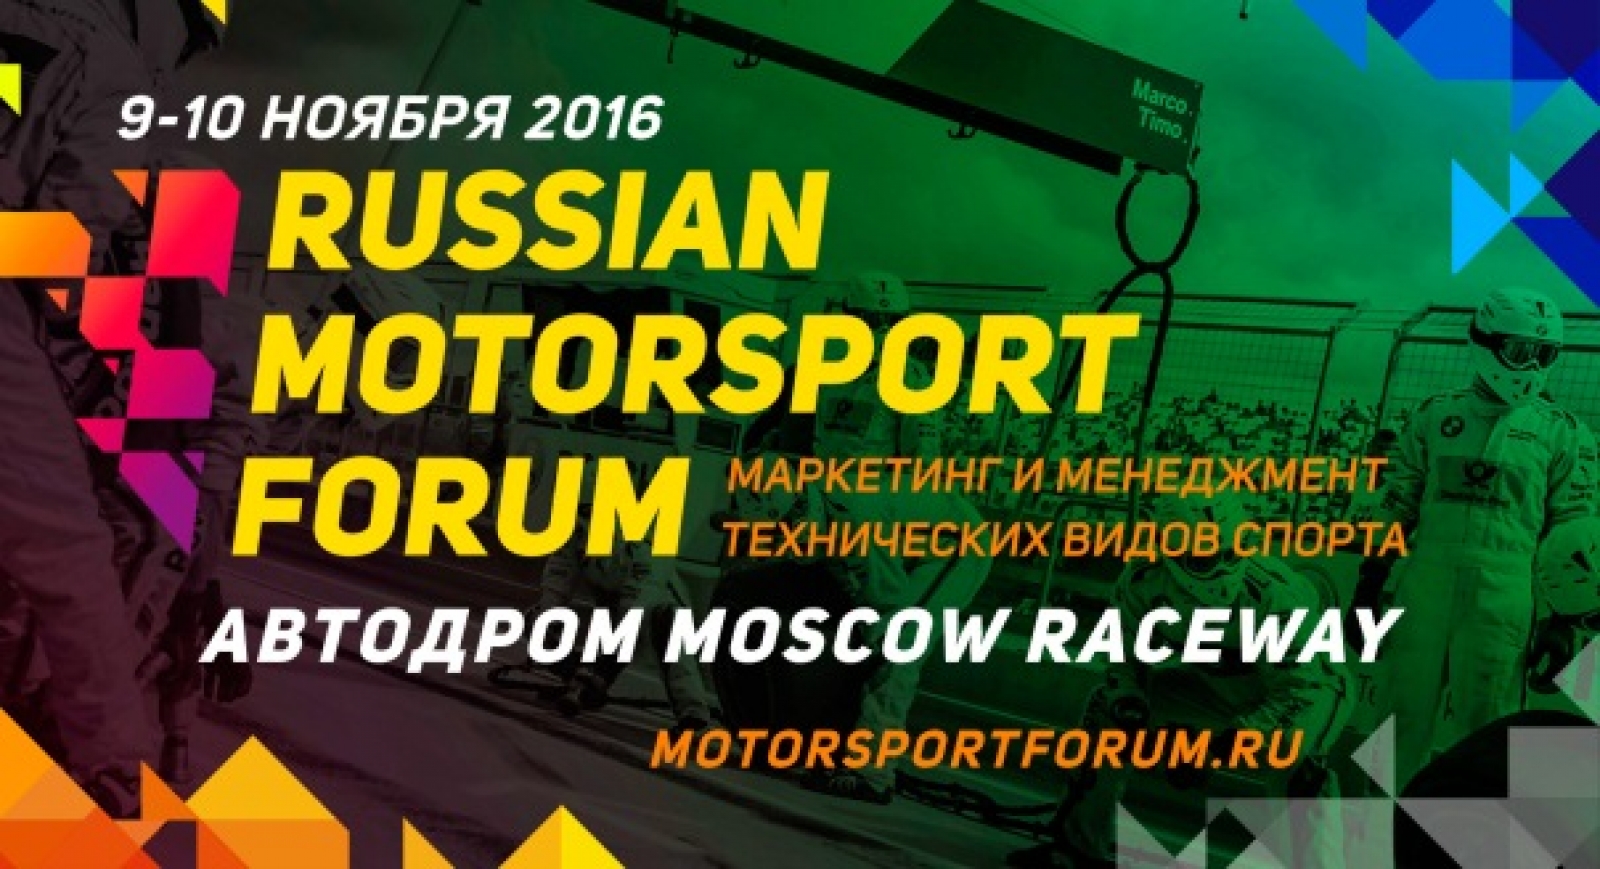 Russian Motorsport Forum: 2 дня до старта!